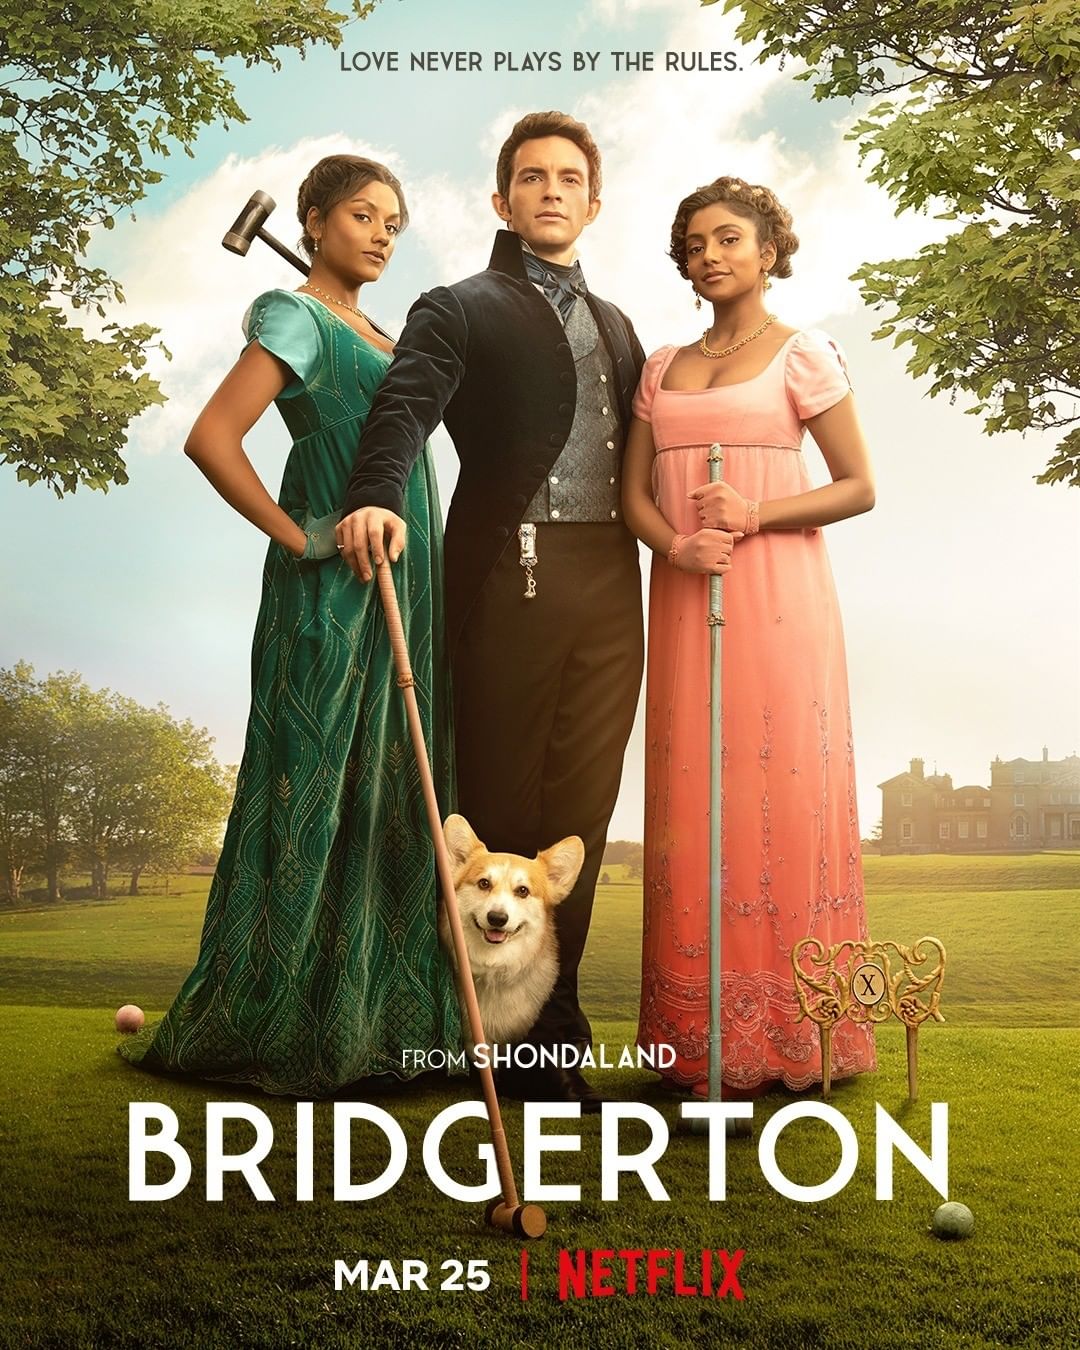 Bridgerton S2 poster featuring Kate Sharma, Anthony Bridgerton, and Edwina Sharma holding croquet mallets